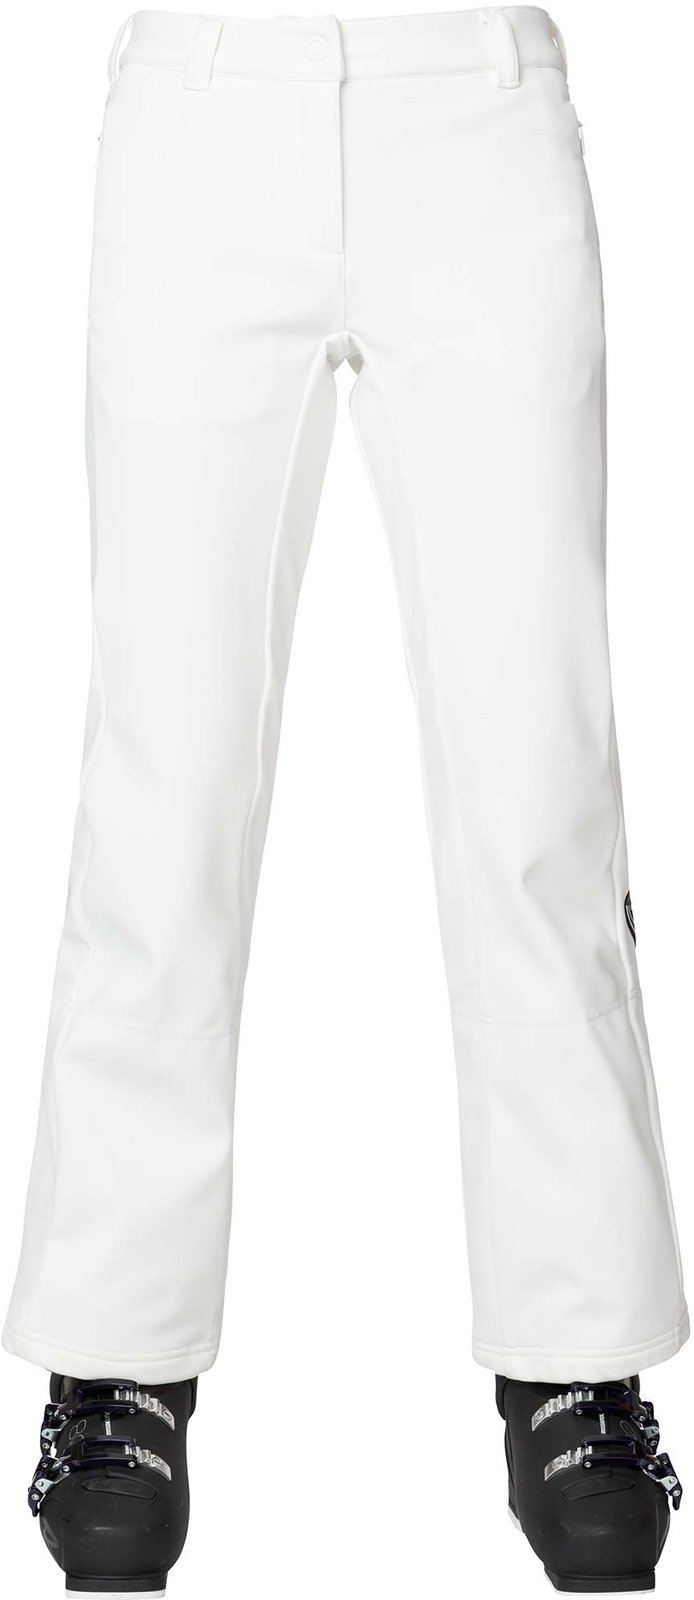 Ски панталон Rossignol Softshell White S